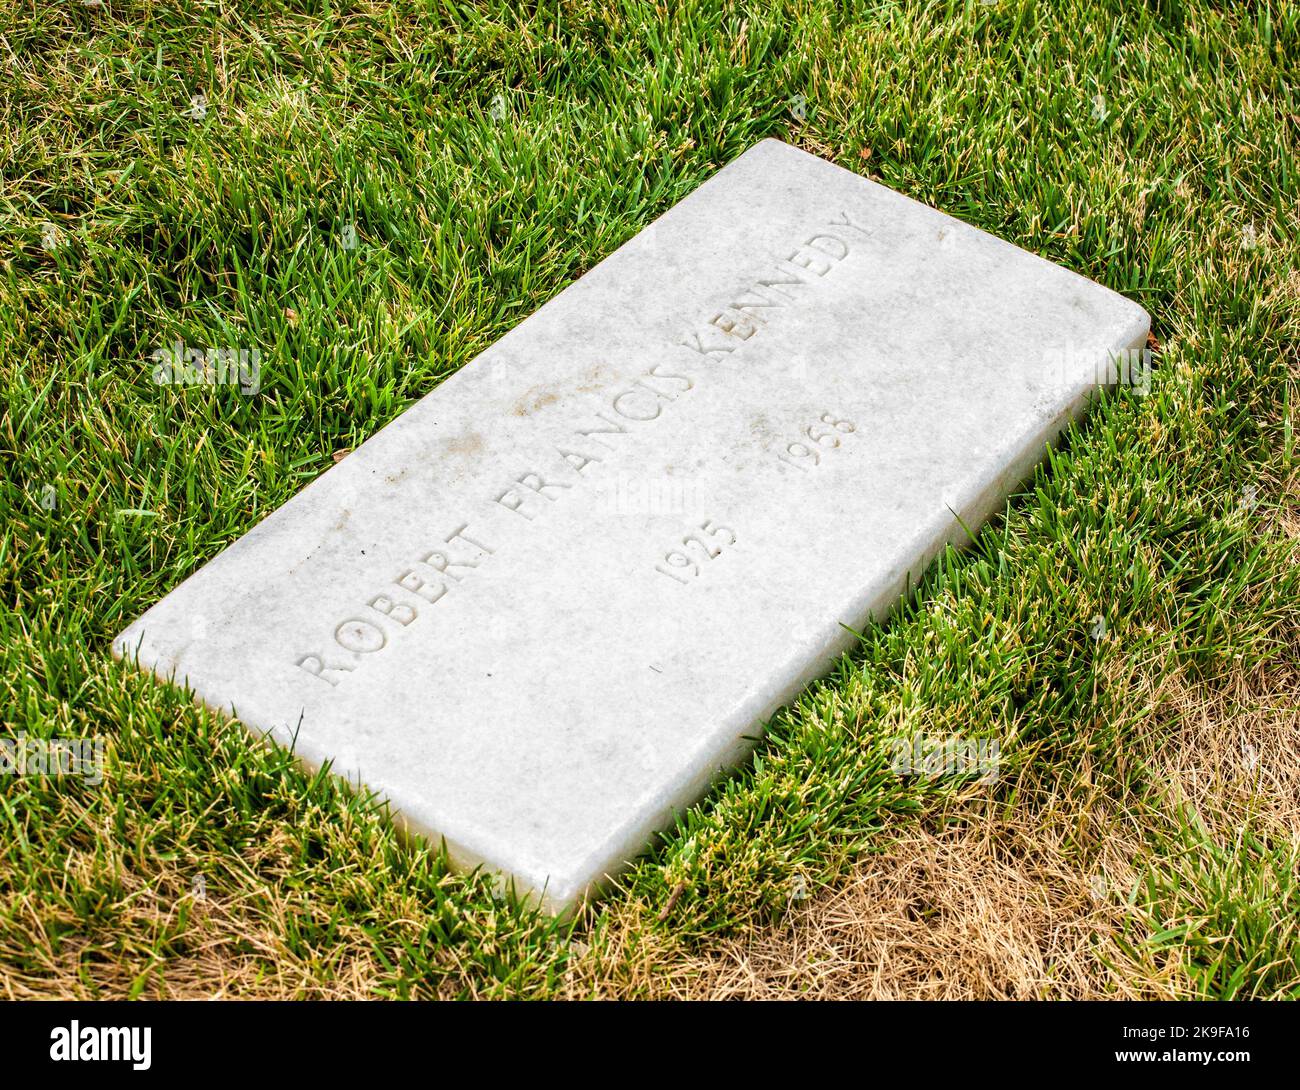 ARLINGTON, USA - 15 LUGLIO 2010: Tomba di Robert Francis Kennedy ad Arlington, USA. Robert Kennedy fu ucciso nel 1968. Foto Stock